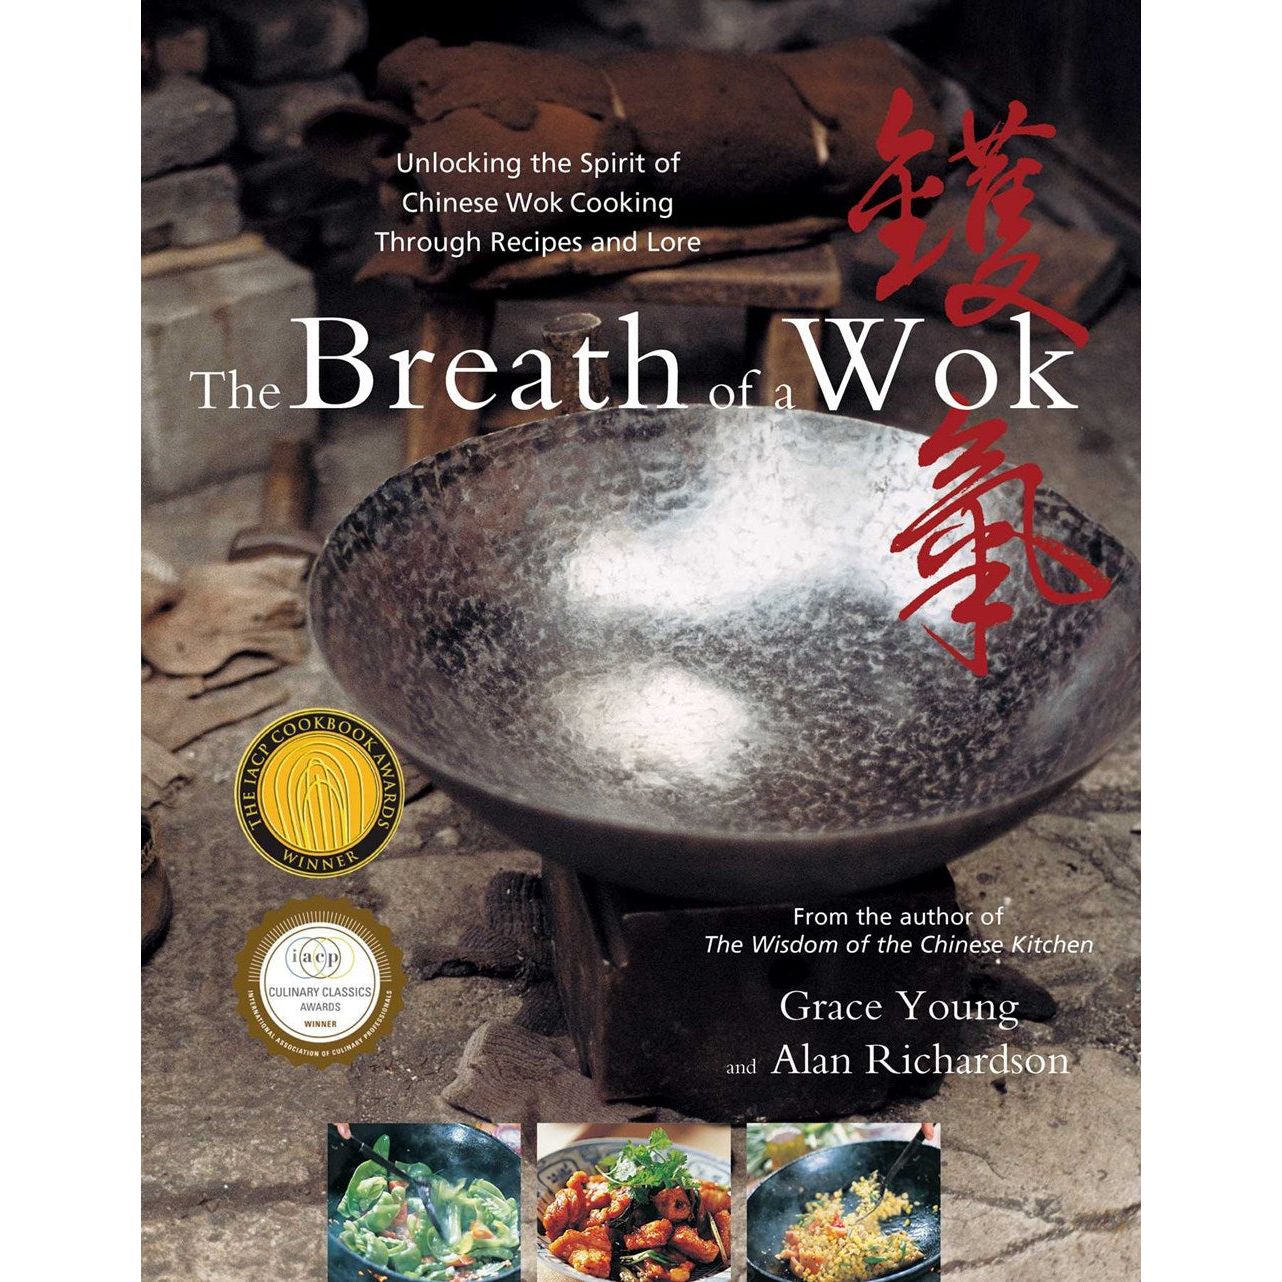 The Breath of a Wok (Grace Young; Alan Richardson)